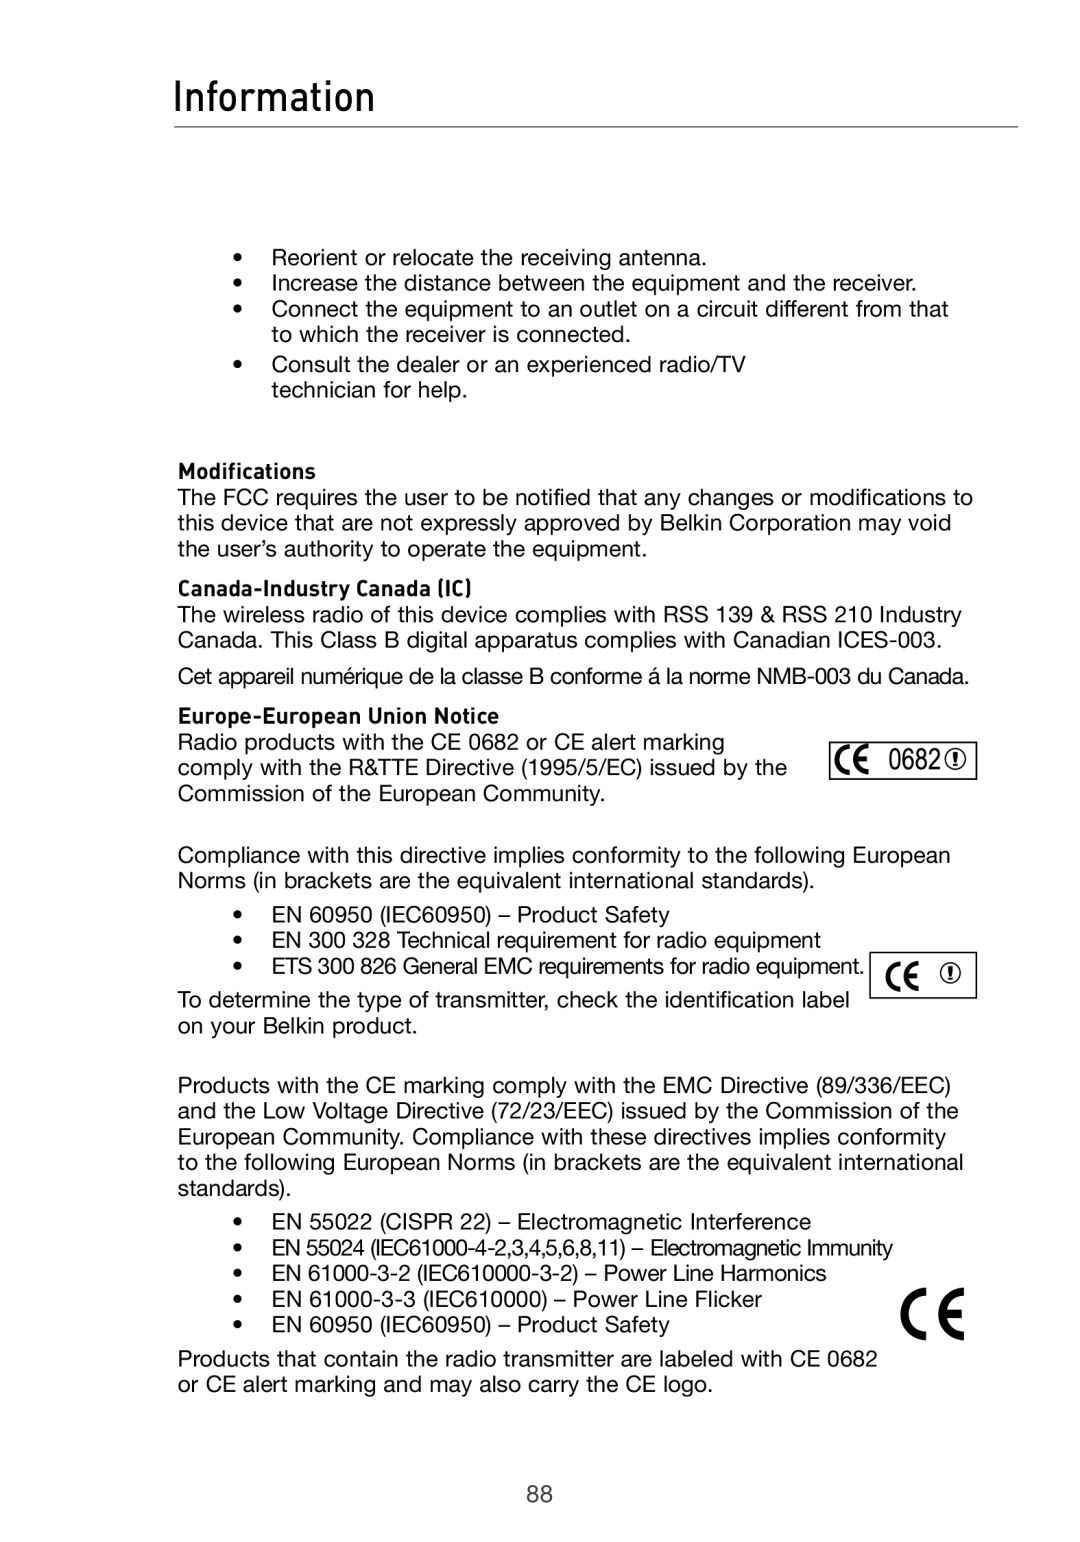 Belkin Pre-N manual Information, Modifications, Canada-Industry Canada IC, Europe-European Union Notice 